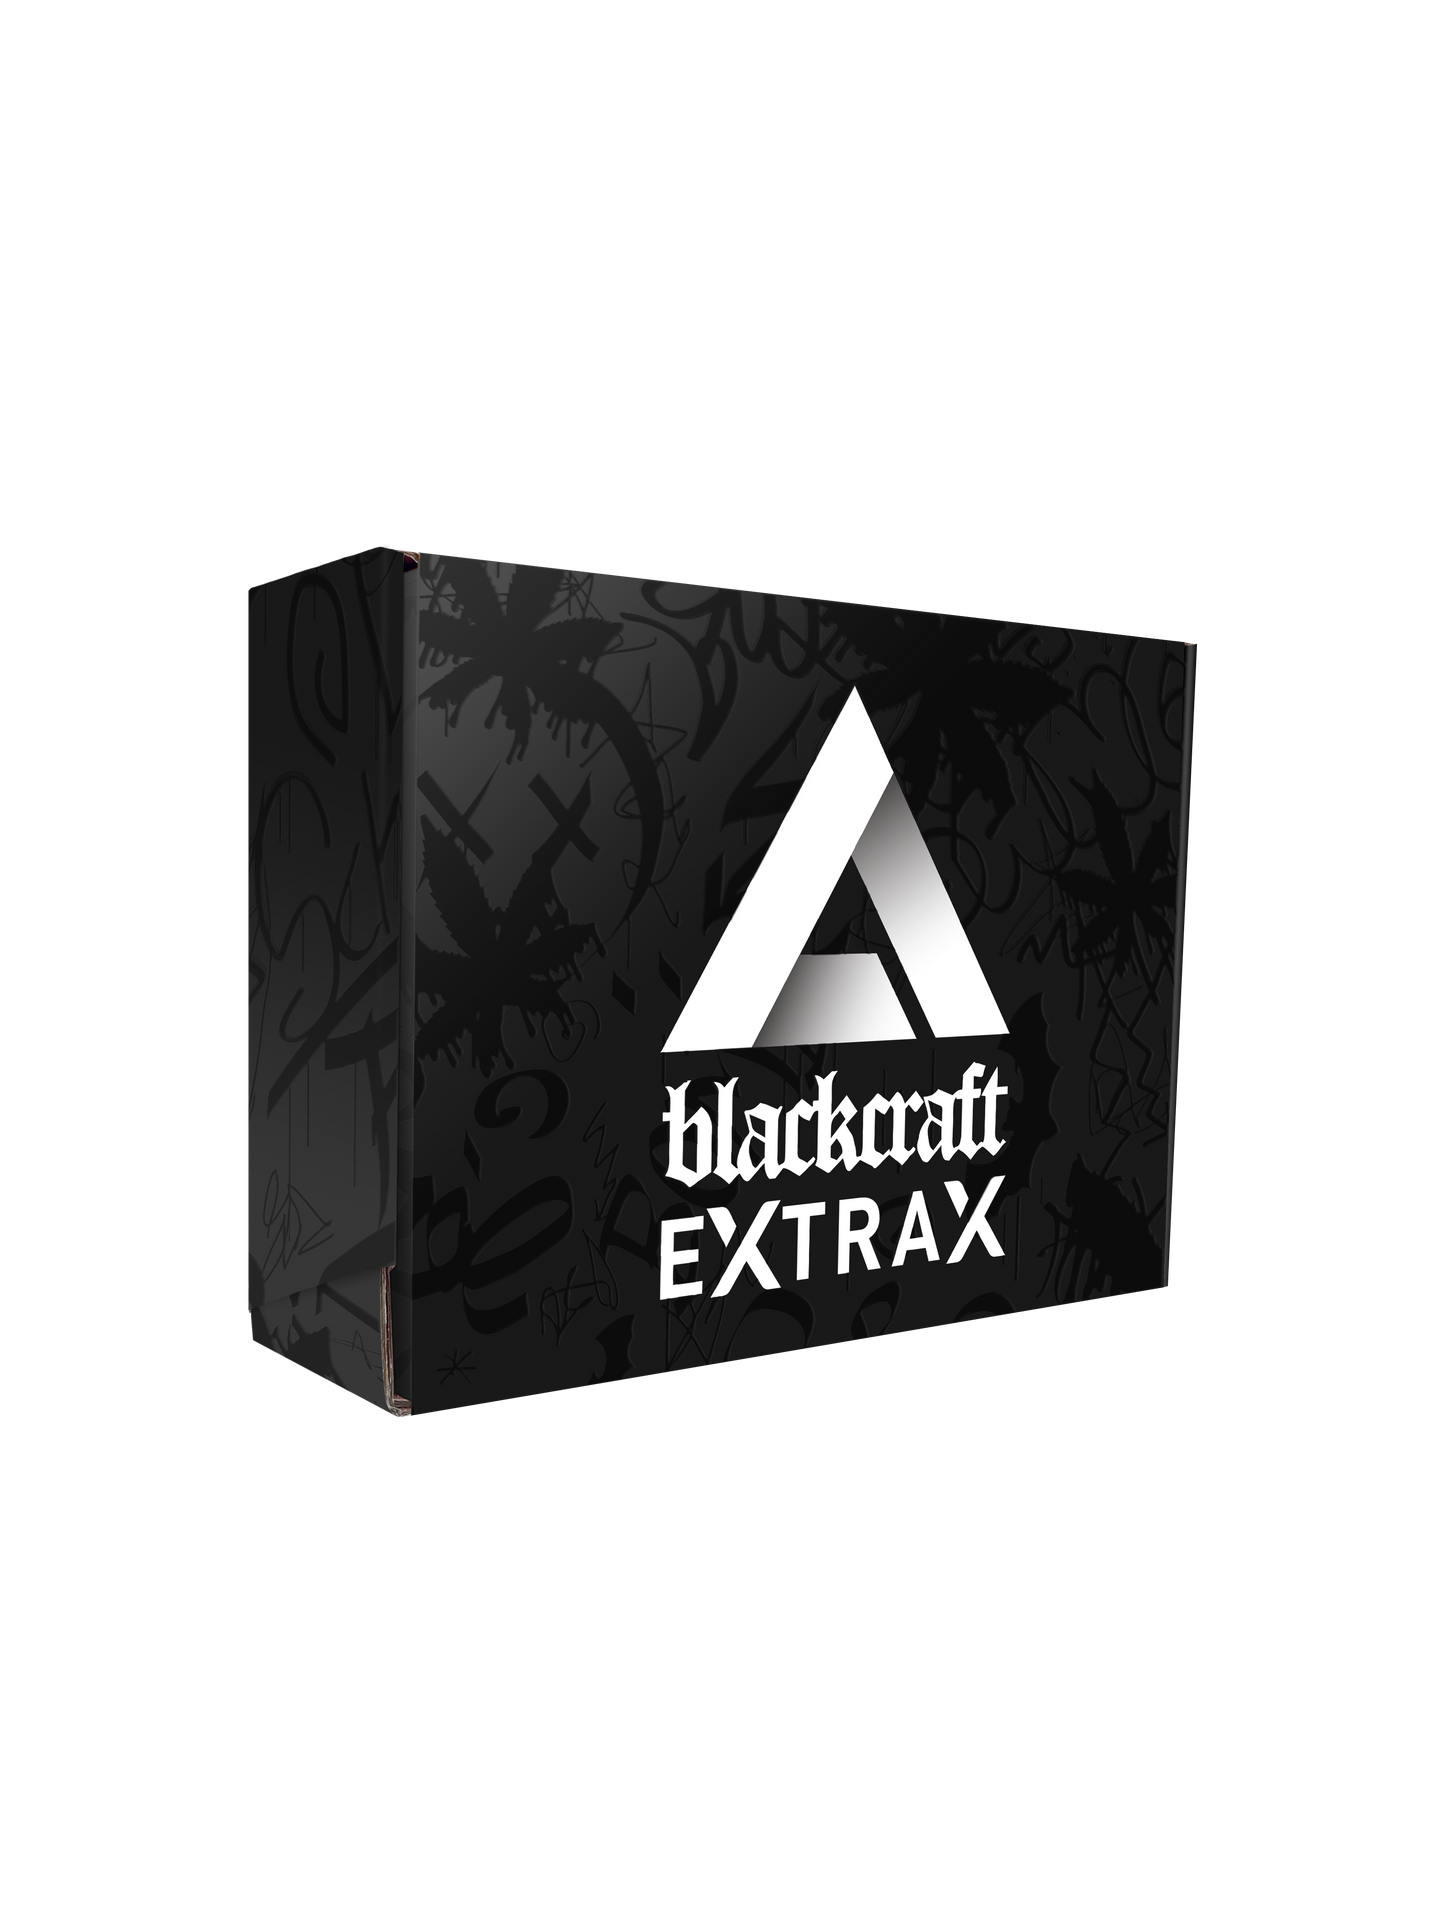 Delta Extrax 666 Bundle | Blackcraft Extrax Best Sales Price - Bundles